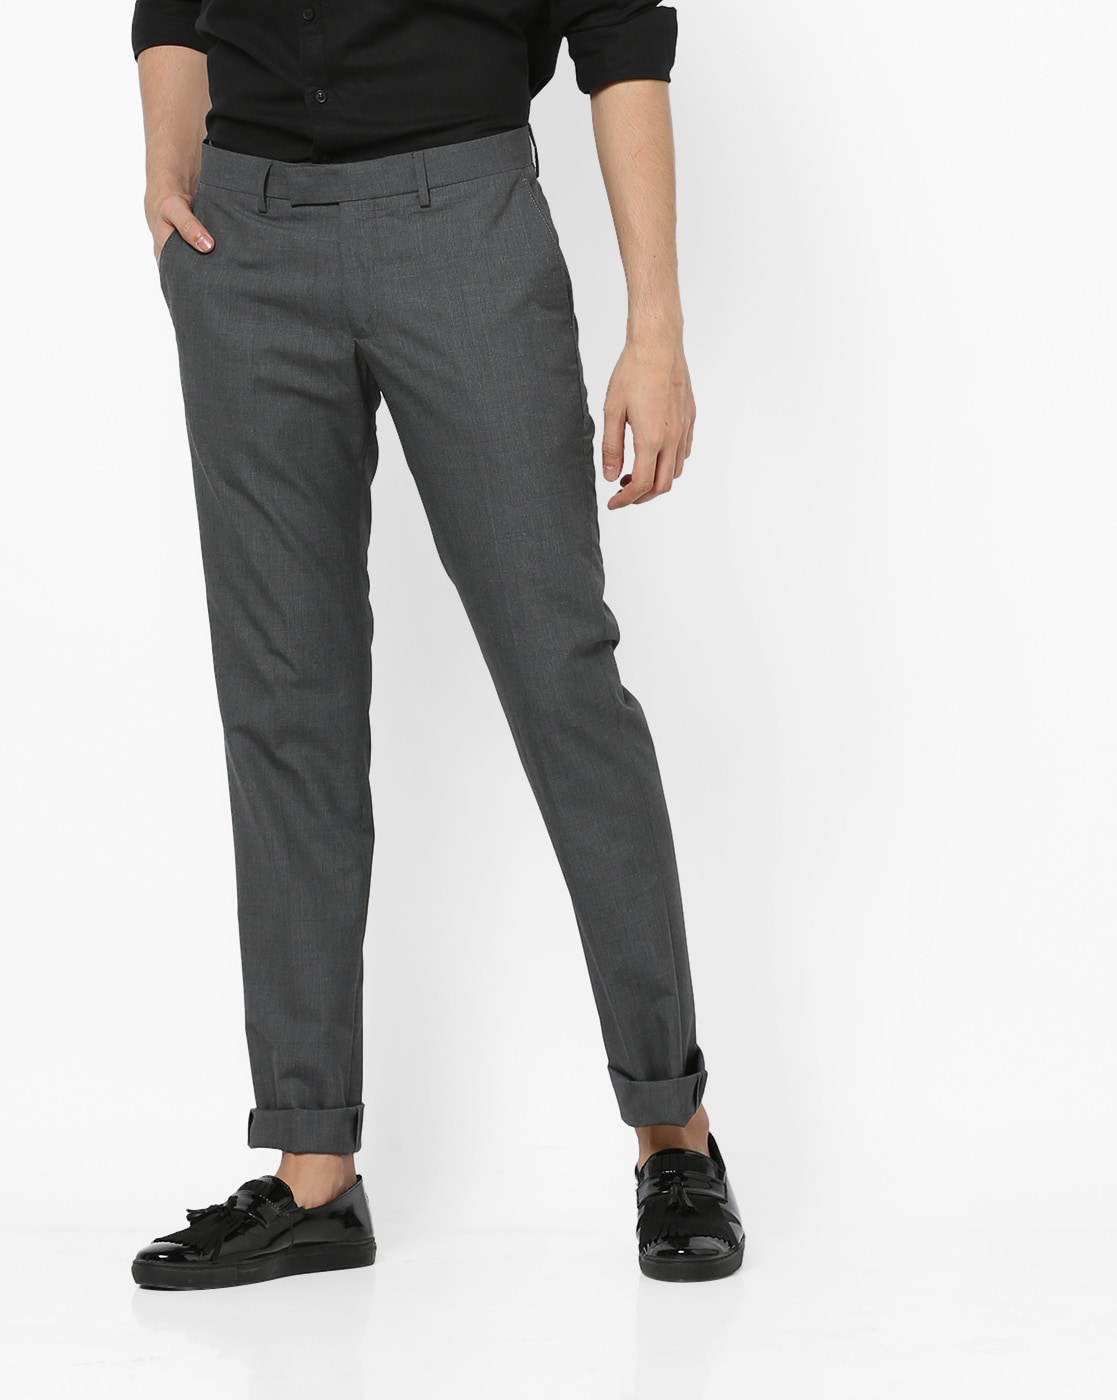 Sixth Element light grey cotton casual trouser - G3-MCT0555 | G3fashion.com